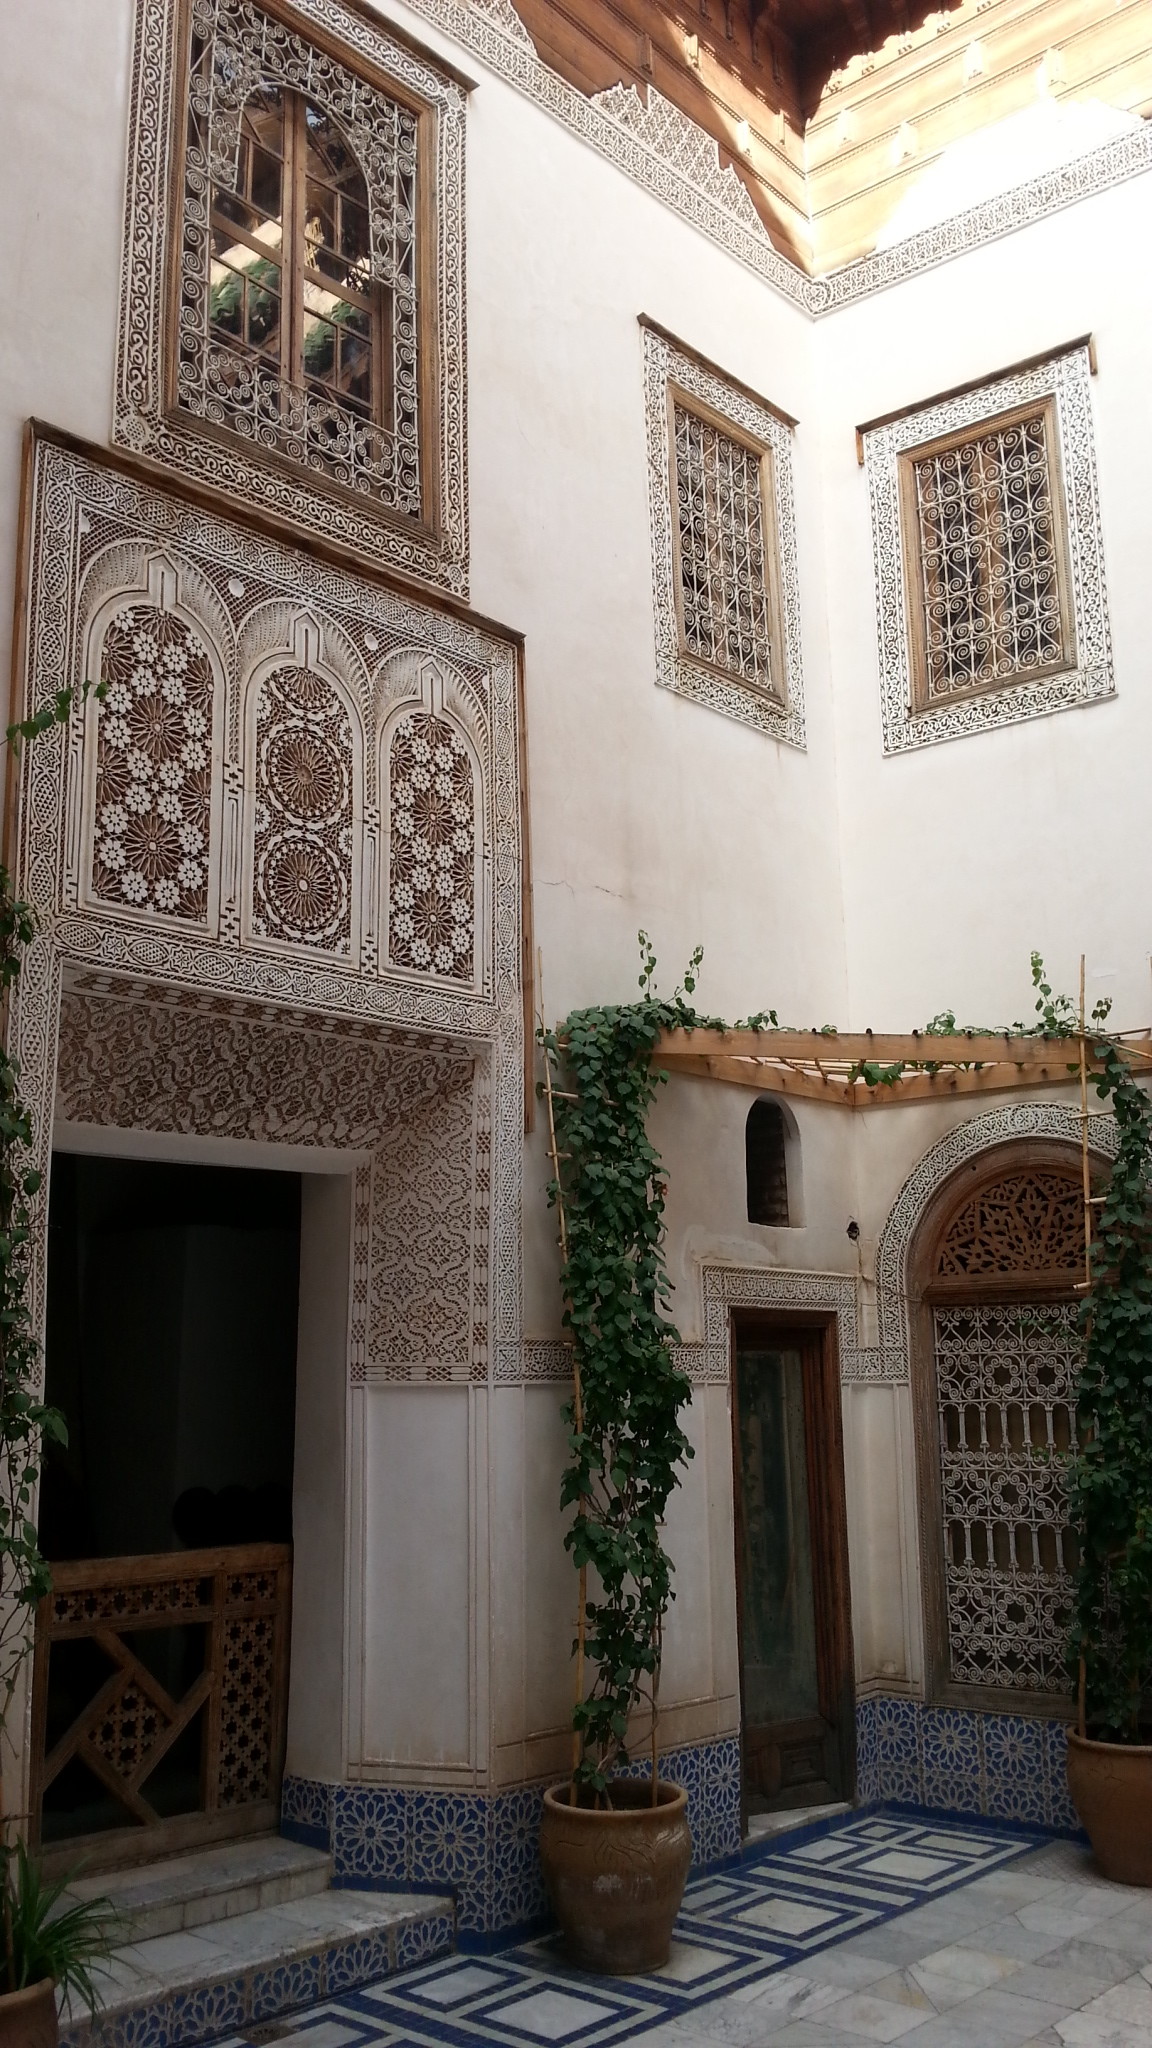 Morocco - Berber Museum